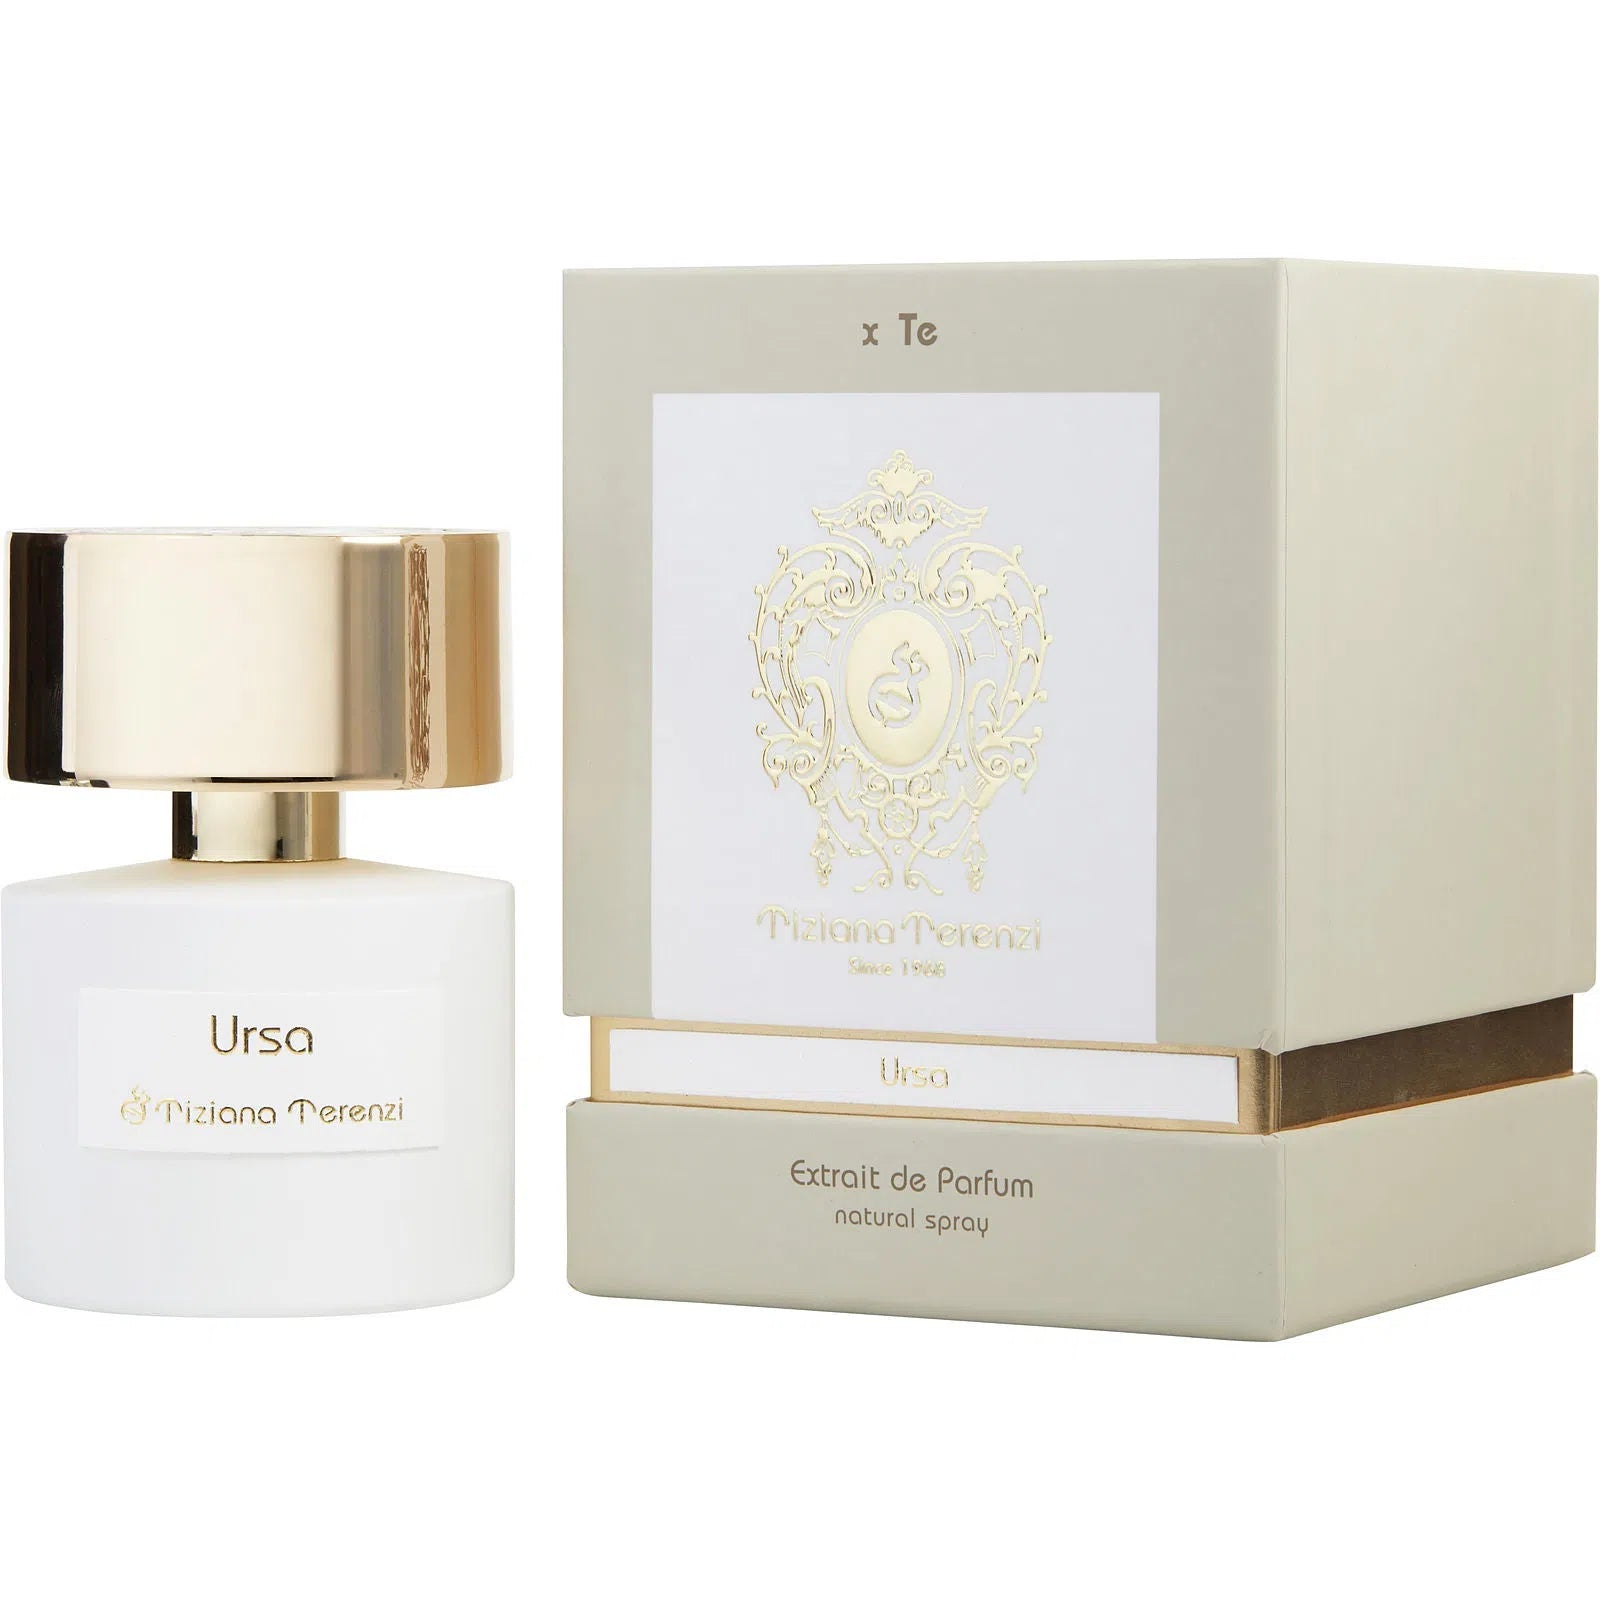 Perfume Tiziana Terenzi Luna Ursa EDP (U) / 100 ml - 8016741652431- Prive Perfumes Honduras